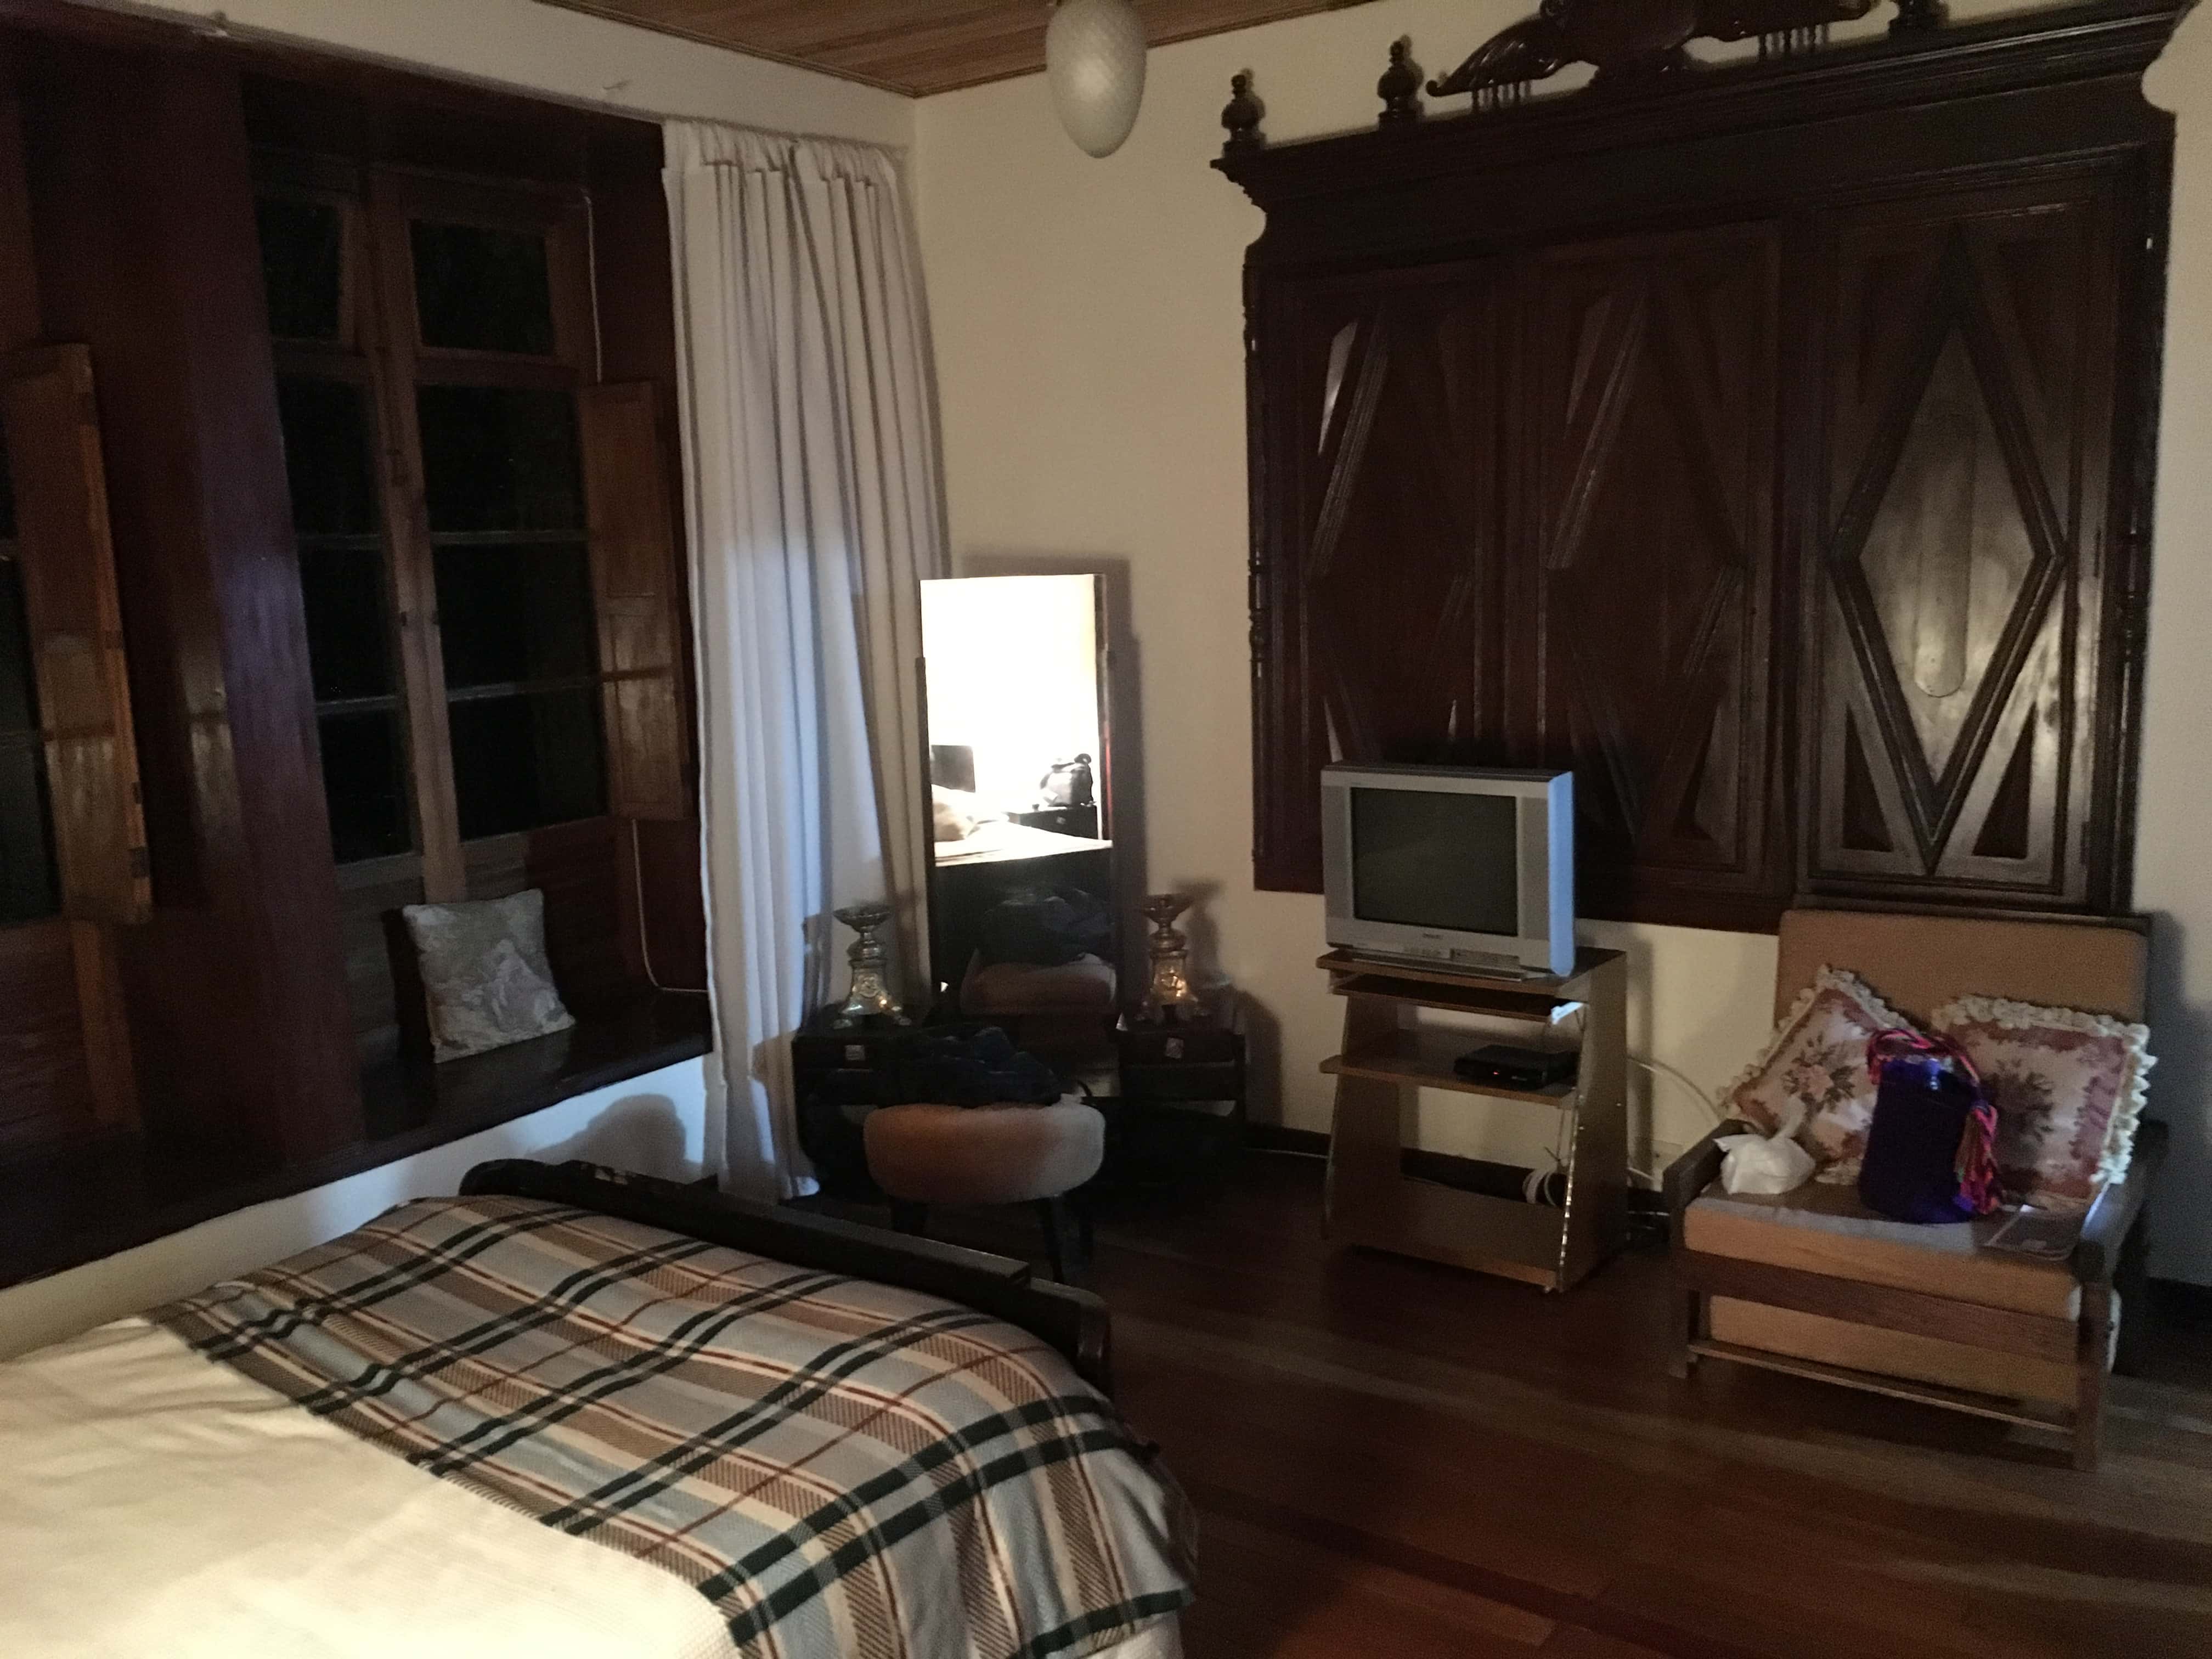 Our room at Finca San Pedro in Sogamoso, Boyacá, Colombia